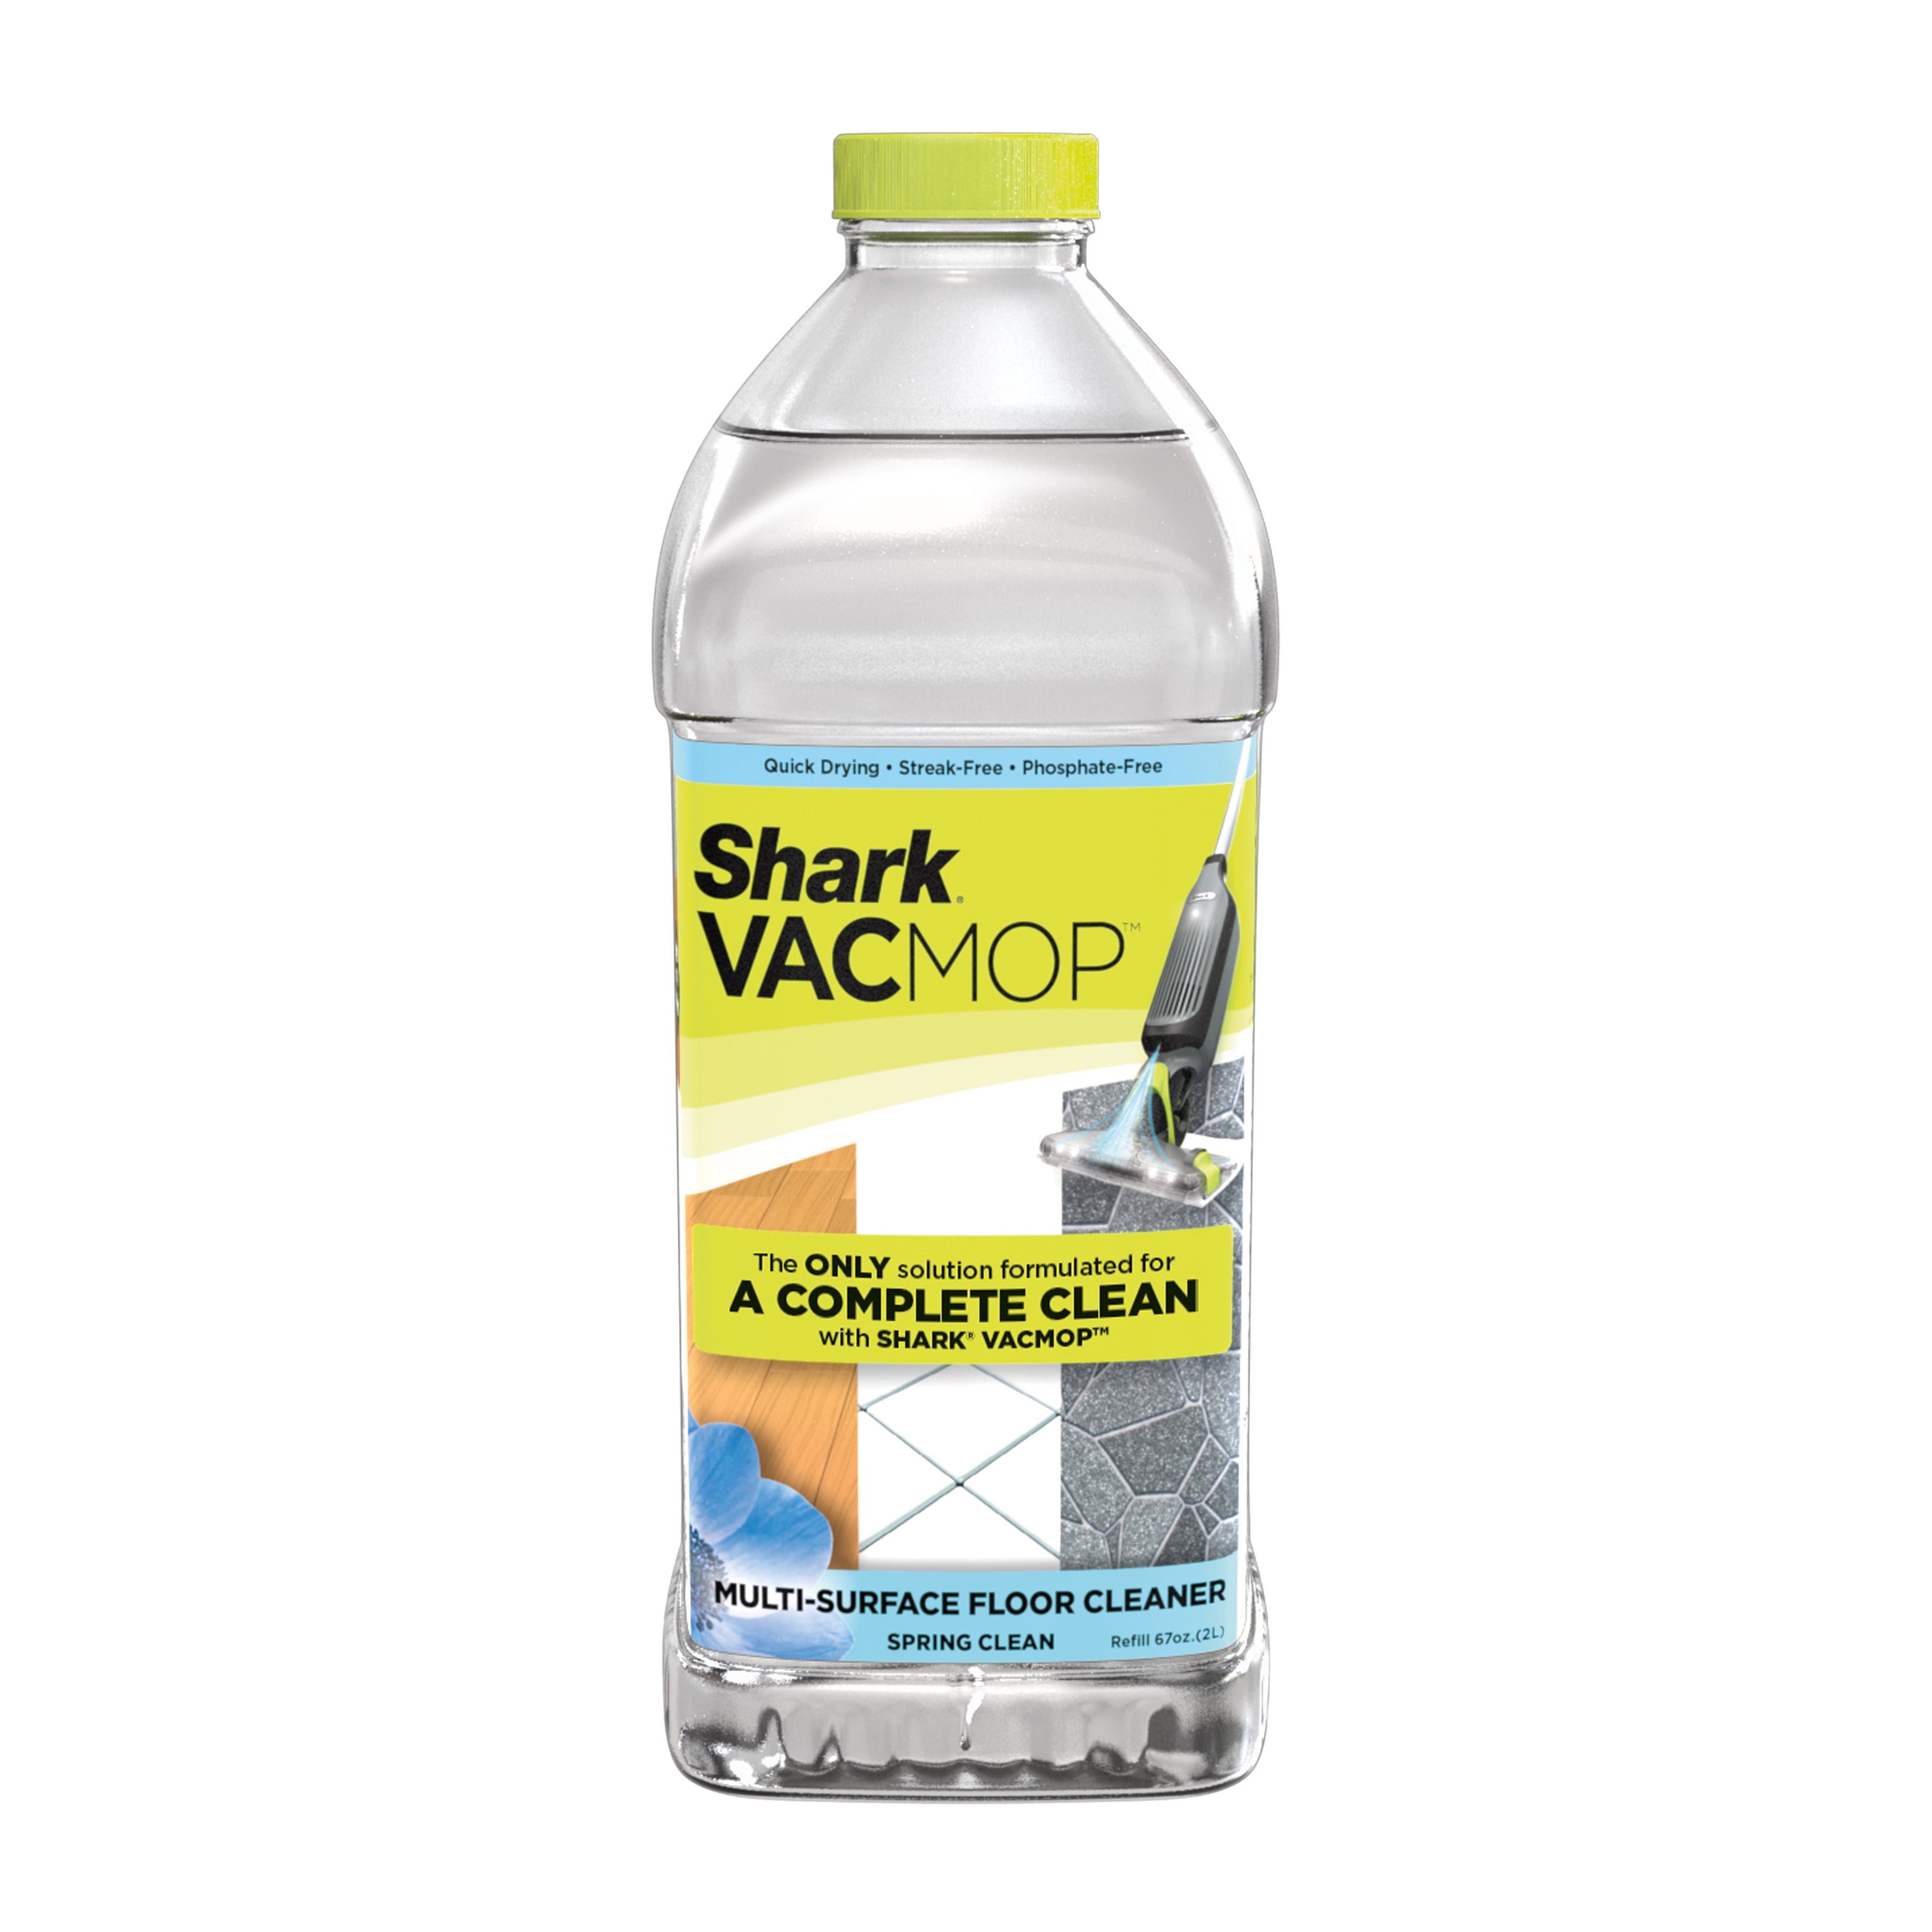 Shark VACMOP™ Multi-Surface Floor Cleaner Refill 2L bottle